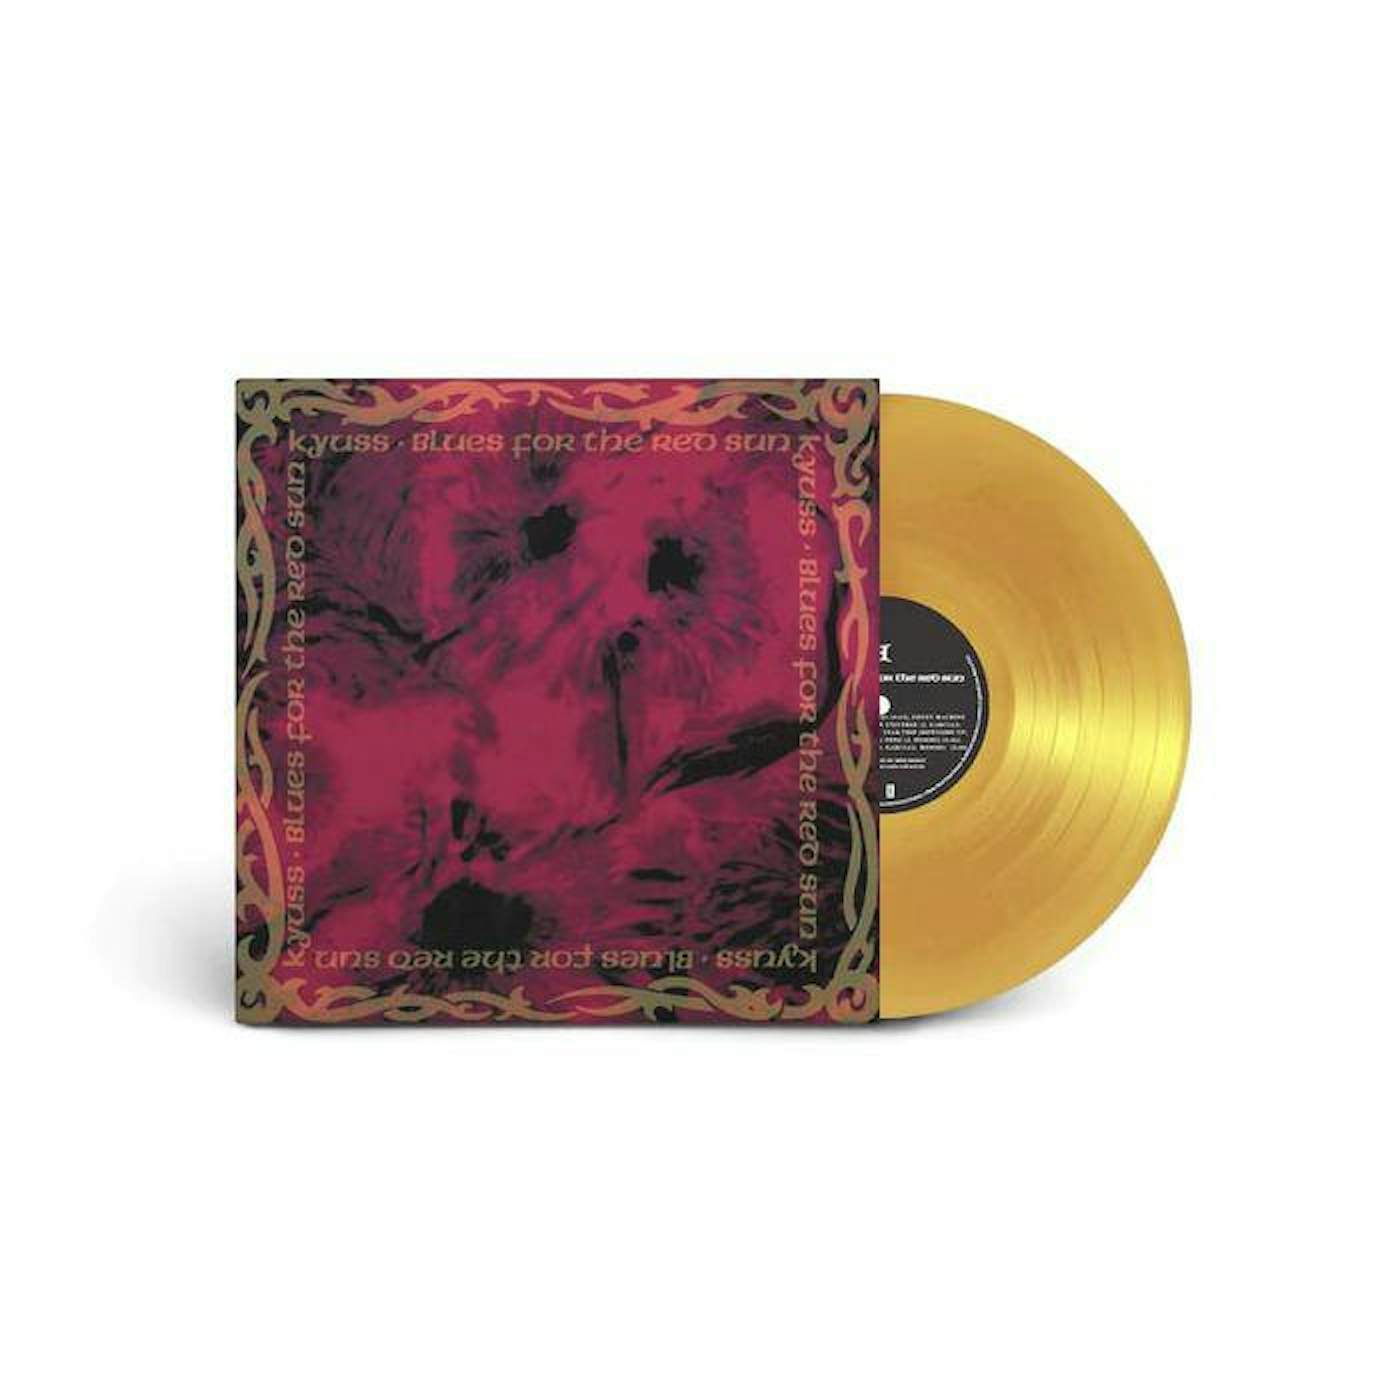 Kyuss BLUES FOR THE RED SUN (GOLD MARBLE VINYL/140G) (ROCKTOBER) Vinyl Record